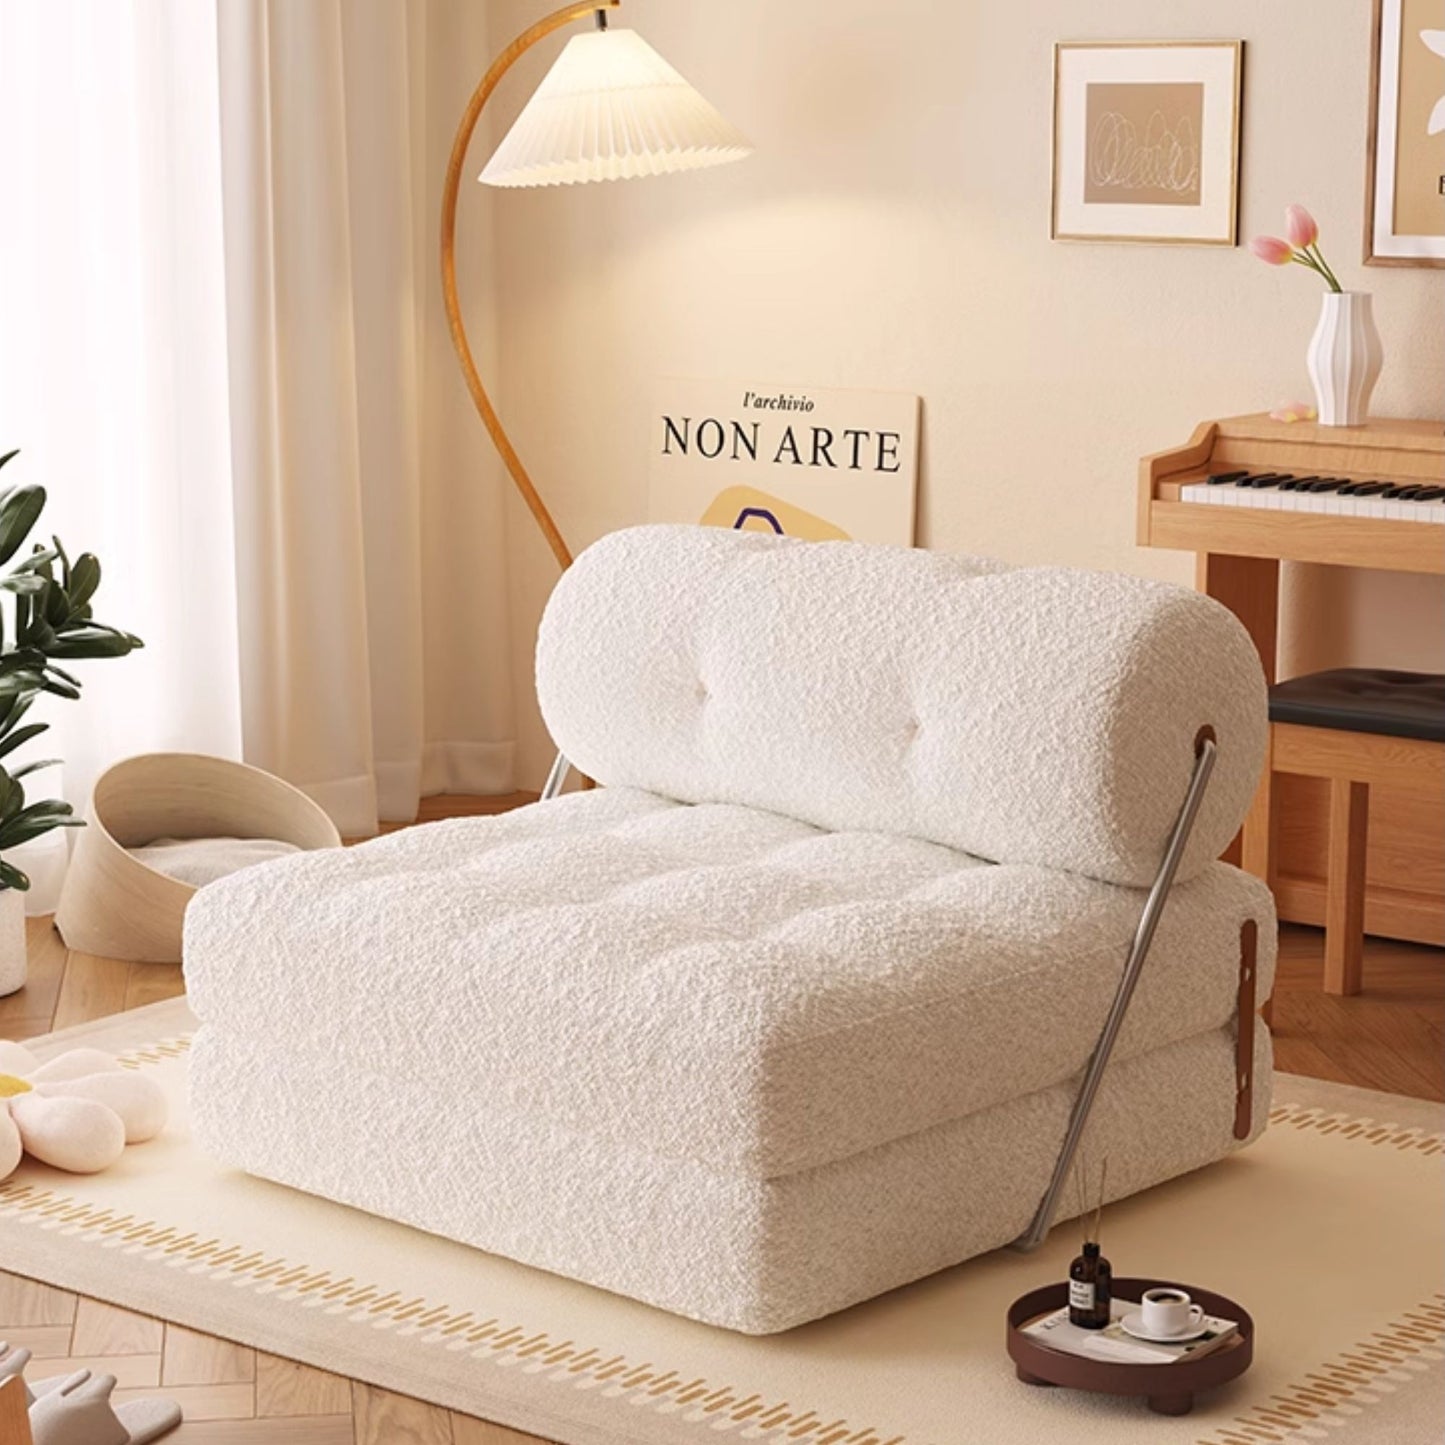 Cob fabric sofa bed white